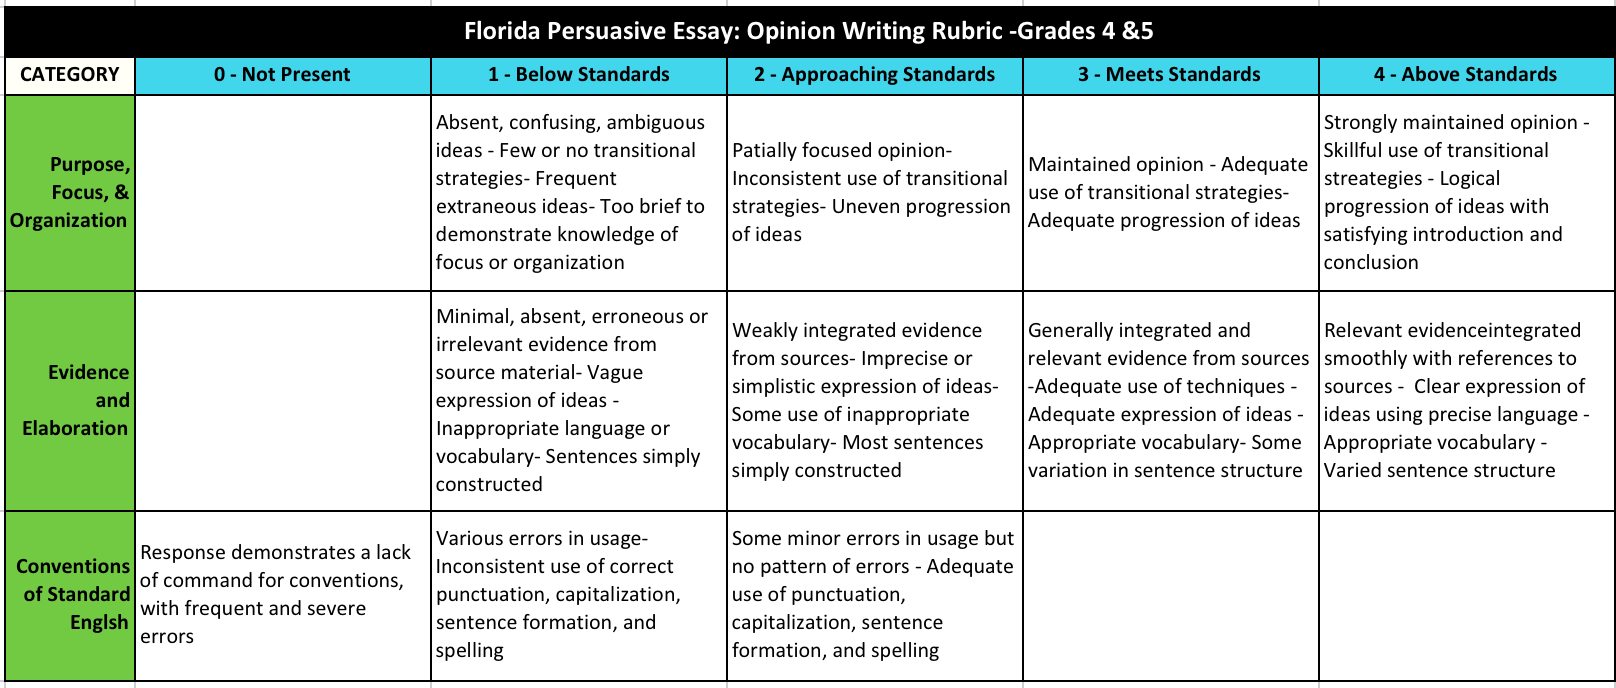 Florida Grades 4-5 Persuasive Opinion Writing Rubric